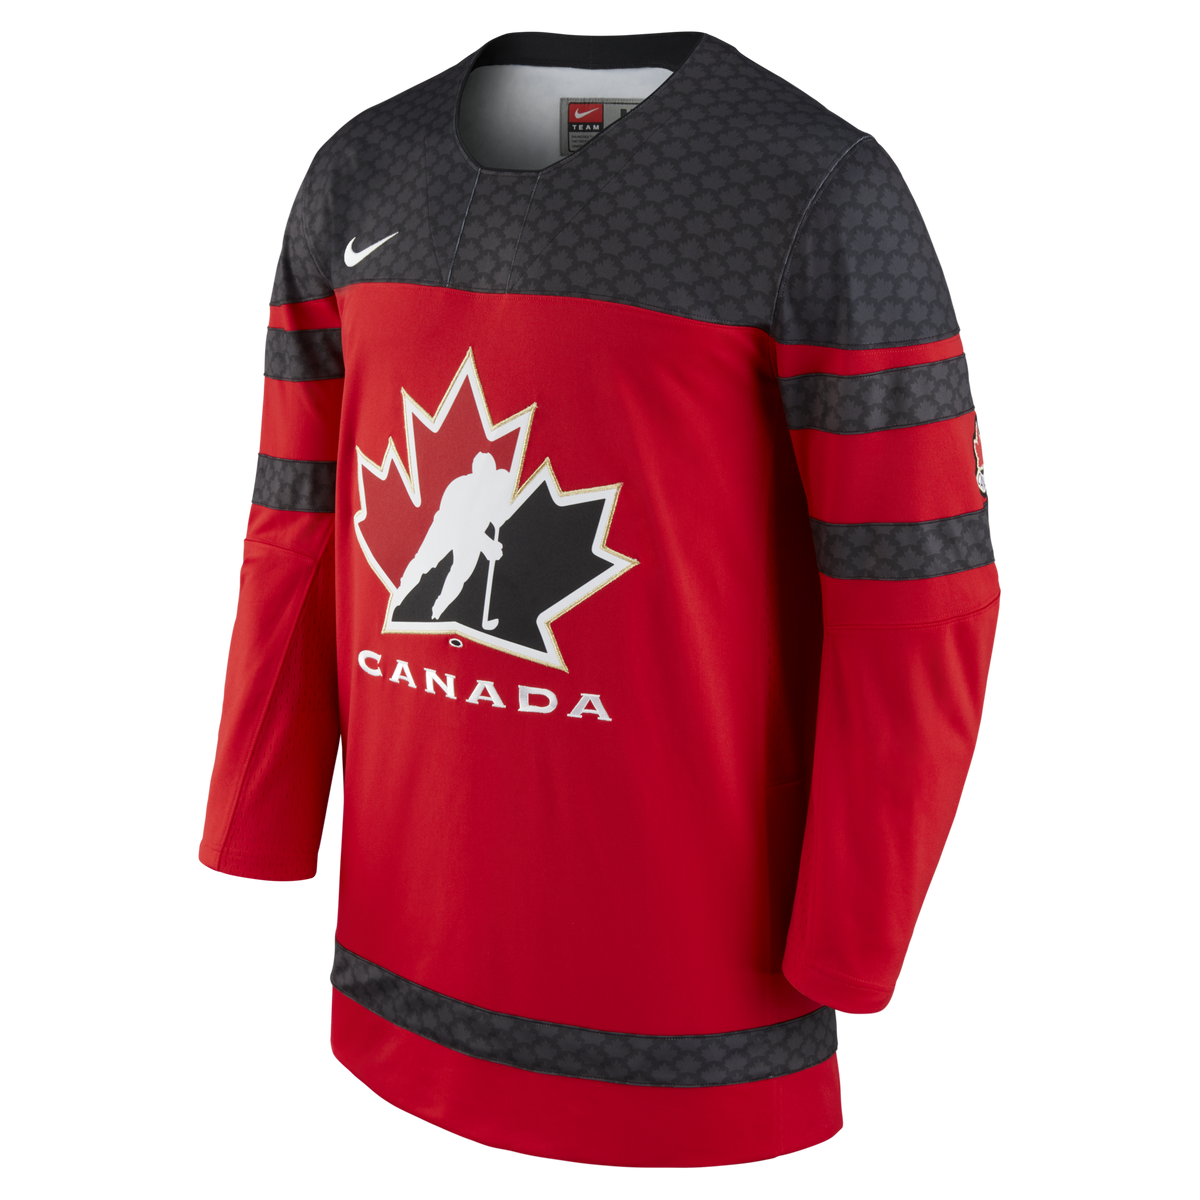 NWT-LG SIDNEY CROSBY RED TEAM CANADA LICENSED IIHF NIKE HOCKEY JERSEY